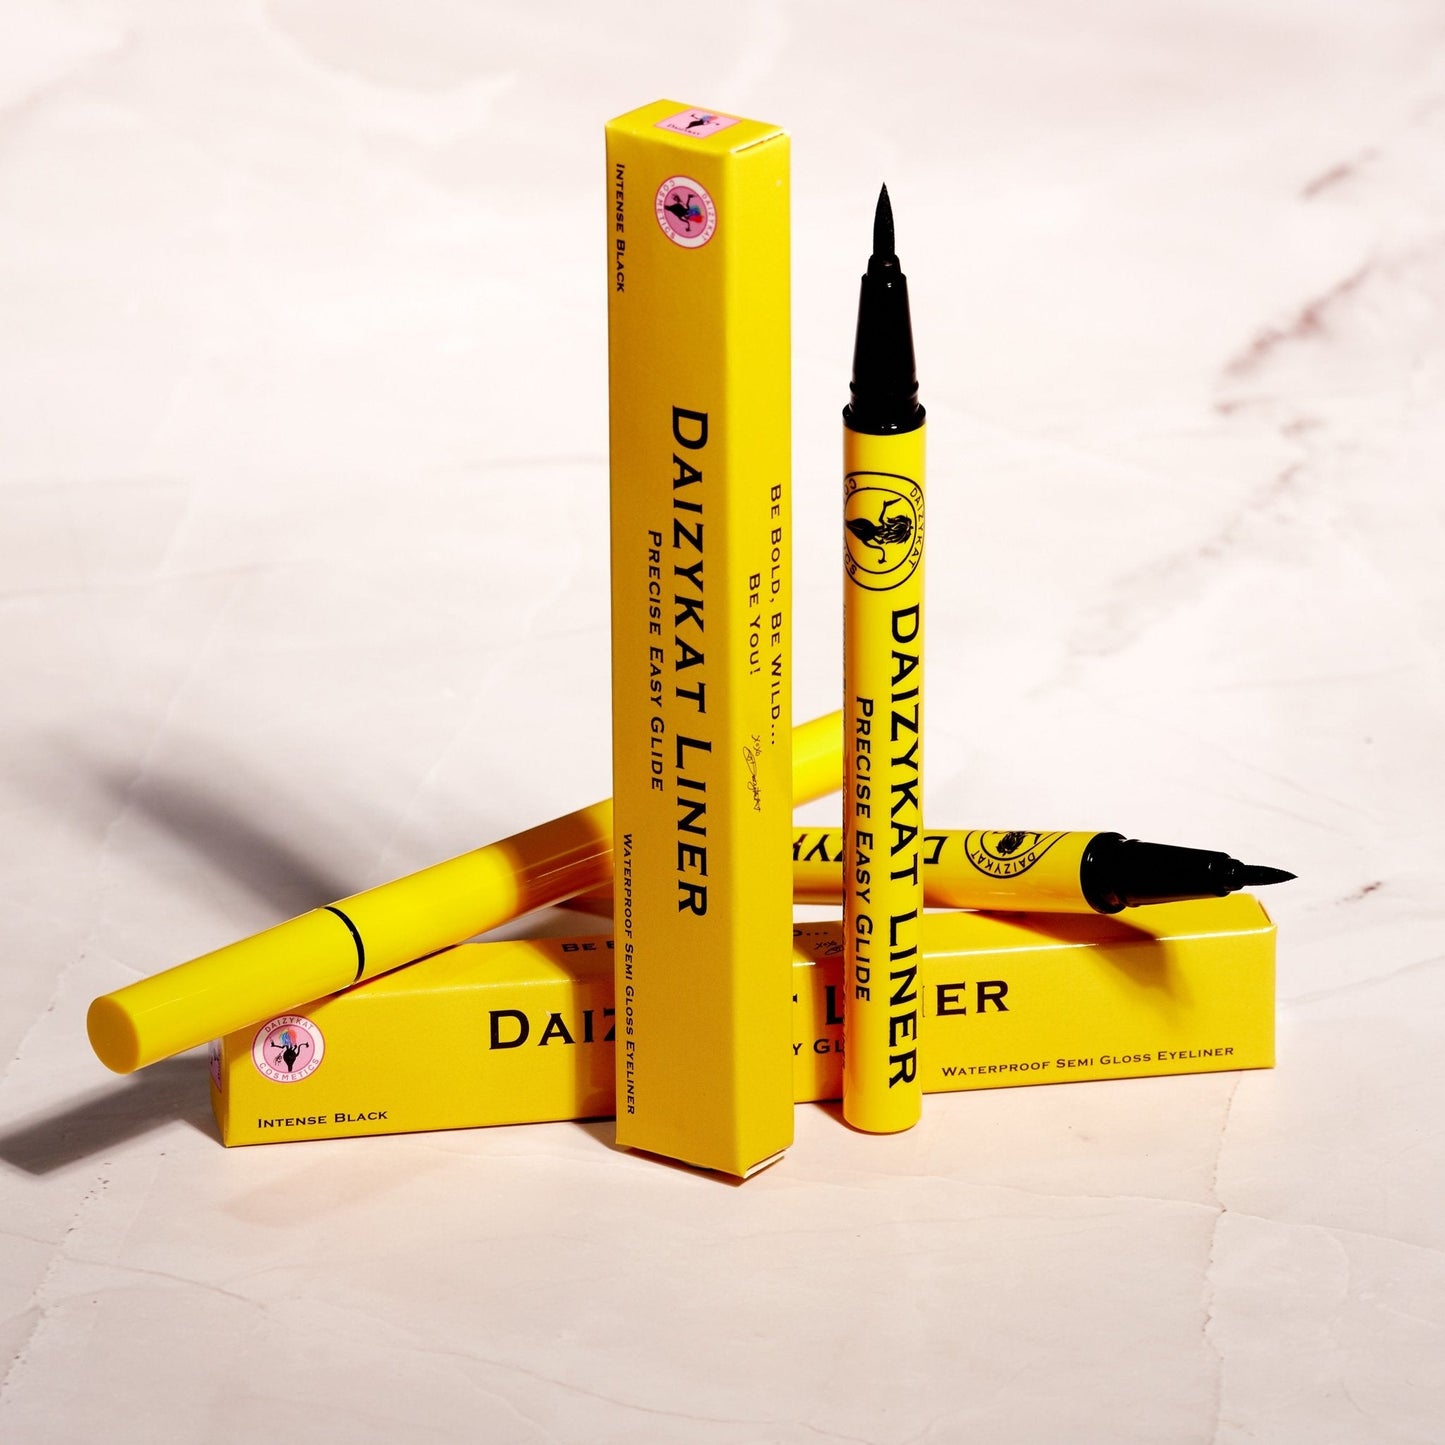 DaizyKat Waterproof Semi Gloss Eyeliner - Yellow Tube - DaizyKat Cosmetics DaizyKat Waterproof Semi Gloss Eyeliner - Yellow Tube DaizyKat Cosmetics eyeliner